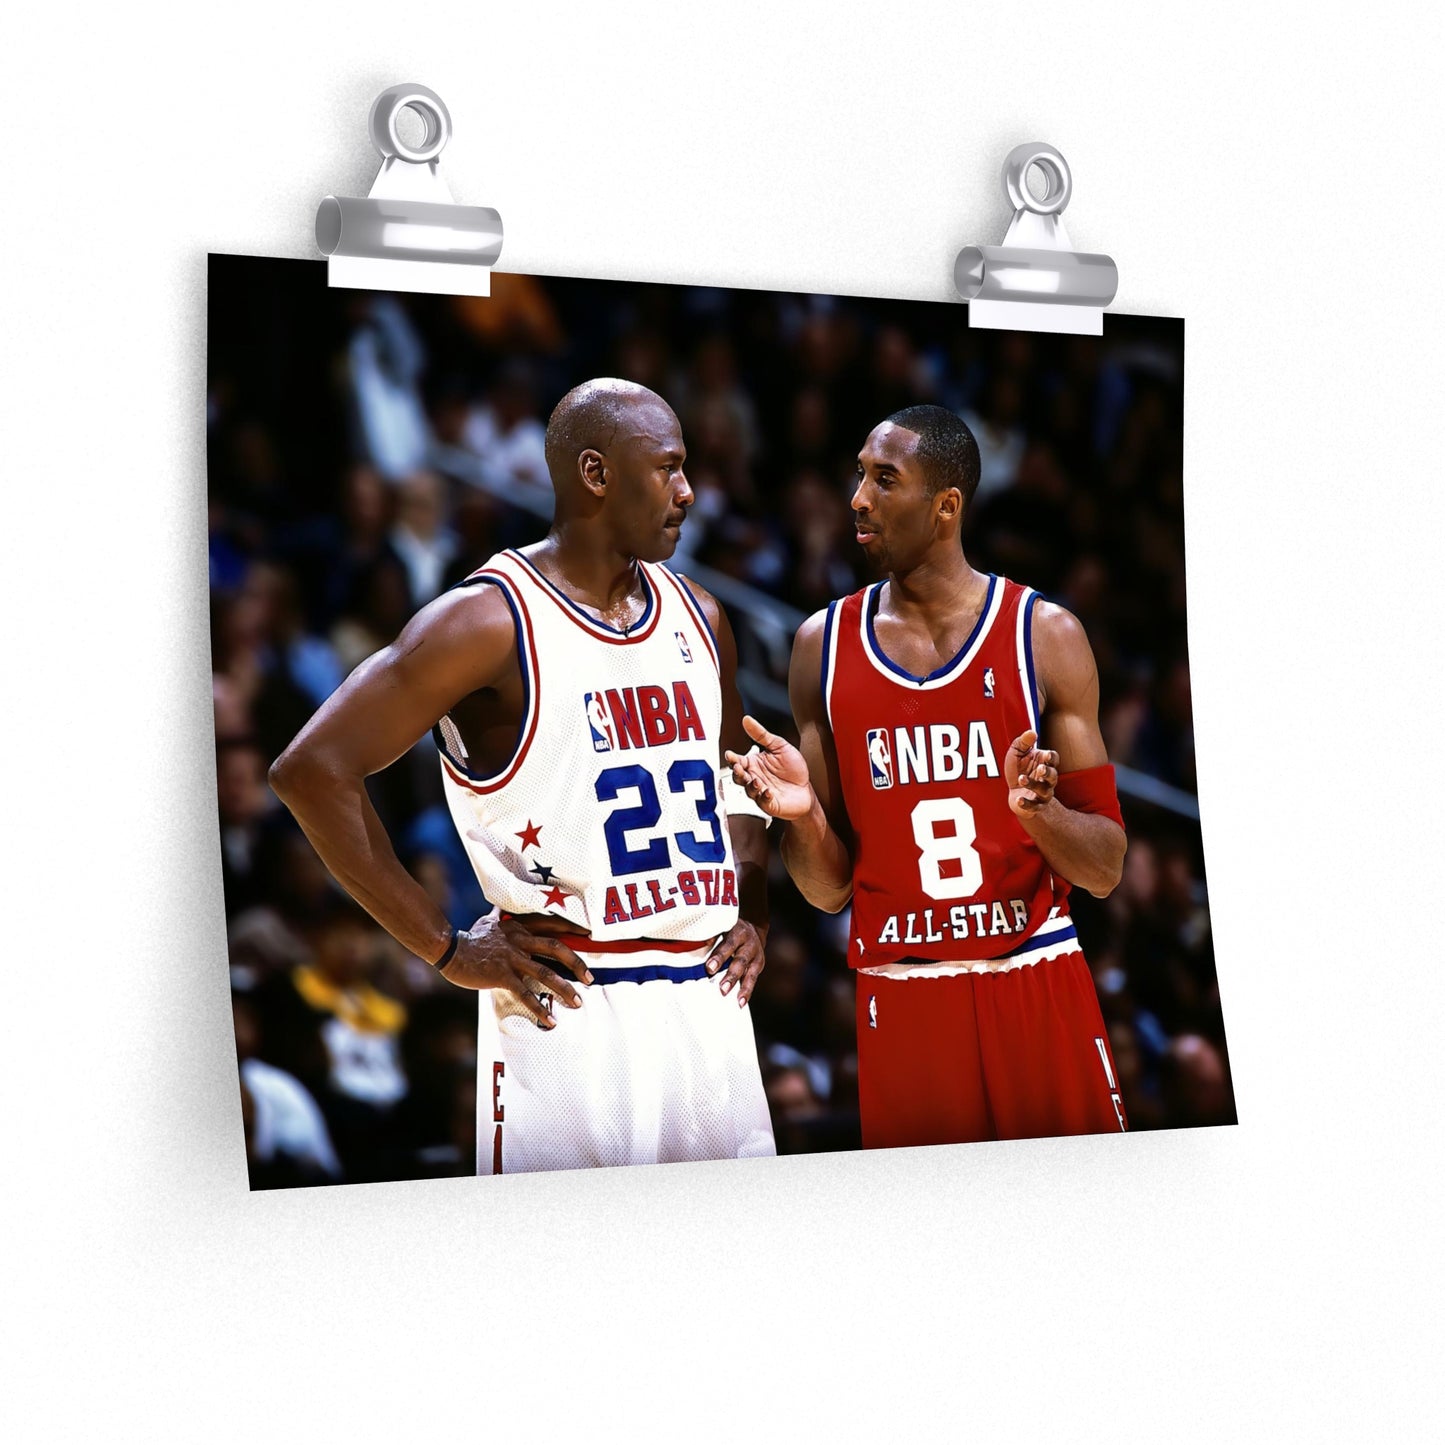 Michael Jordan And Kobe Bryant Speak On Court At All Stars Game Poster